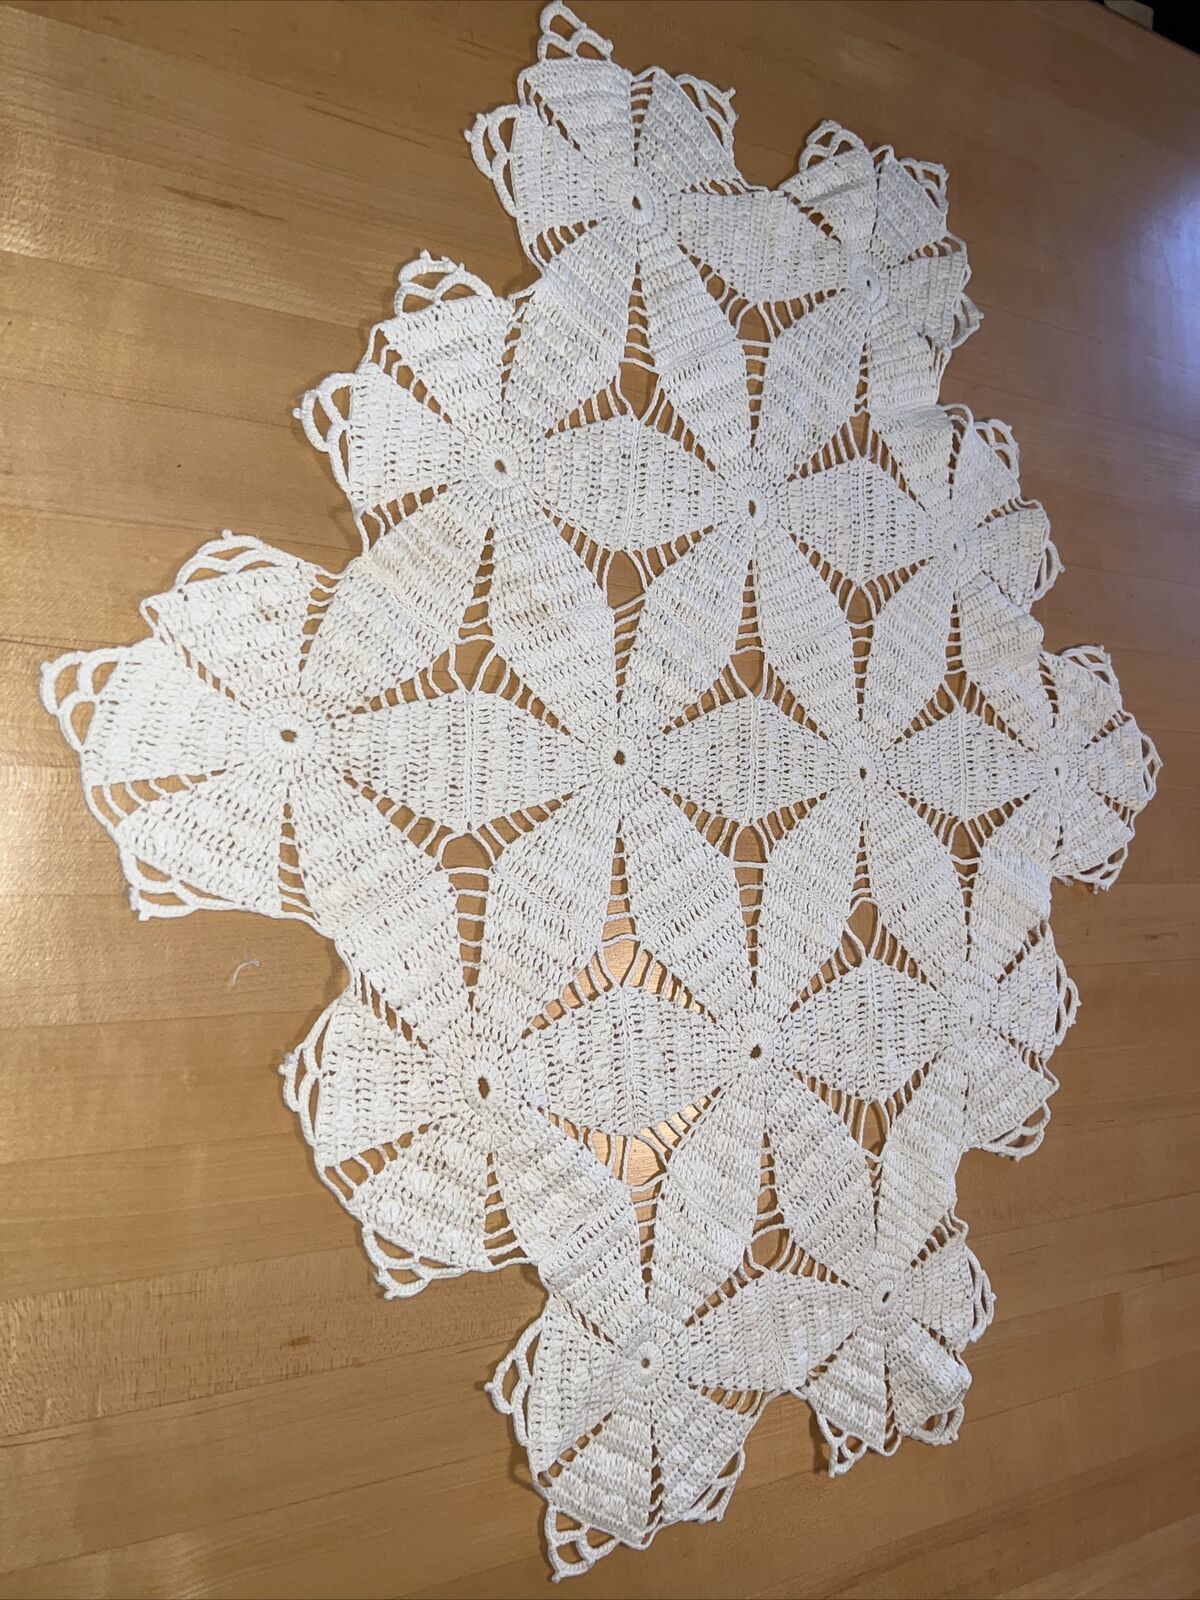 Crochet Doily Vintage Large White 25” By 22”Excellent Condition, Cotton